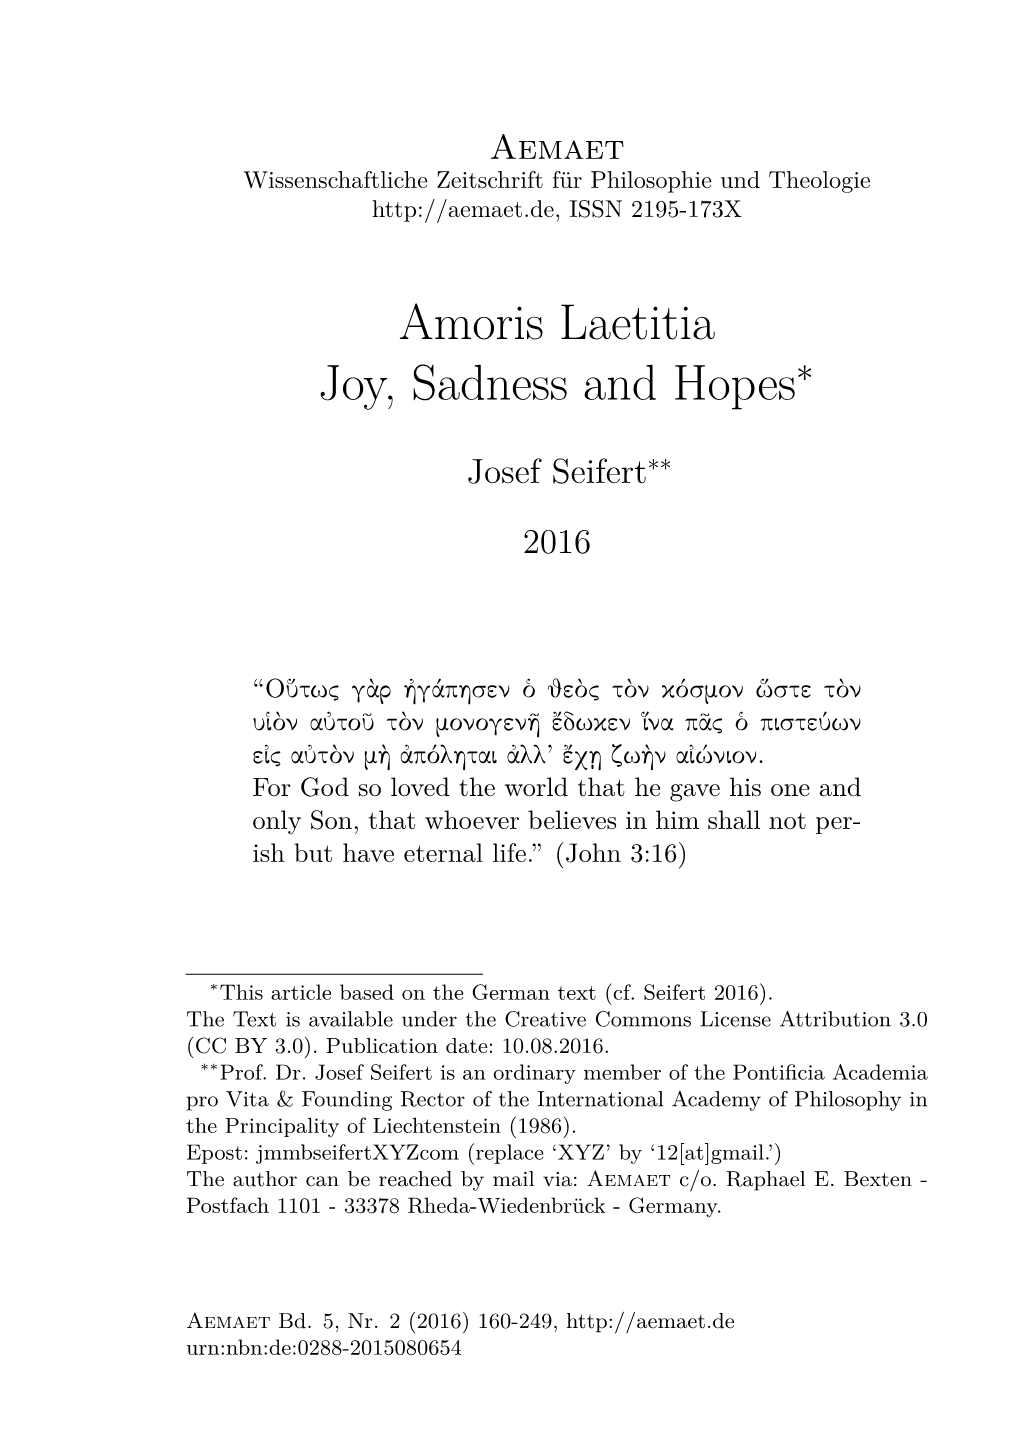 Amoris Laetitia: Joy, Sadness and Hopes 161